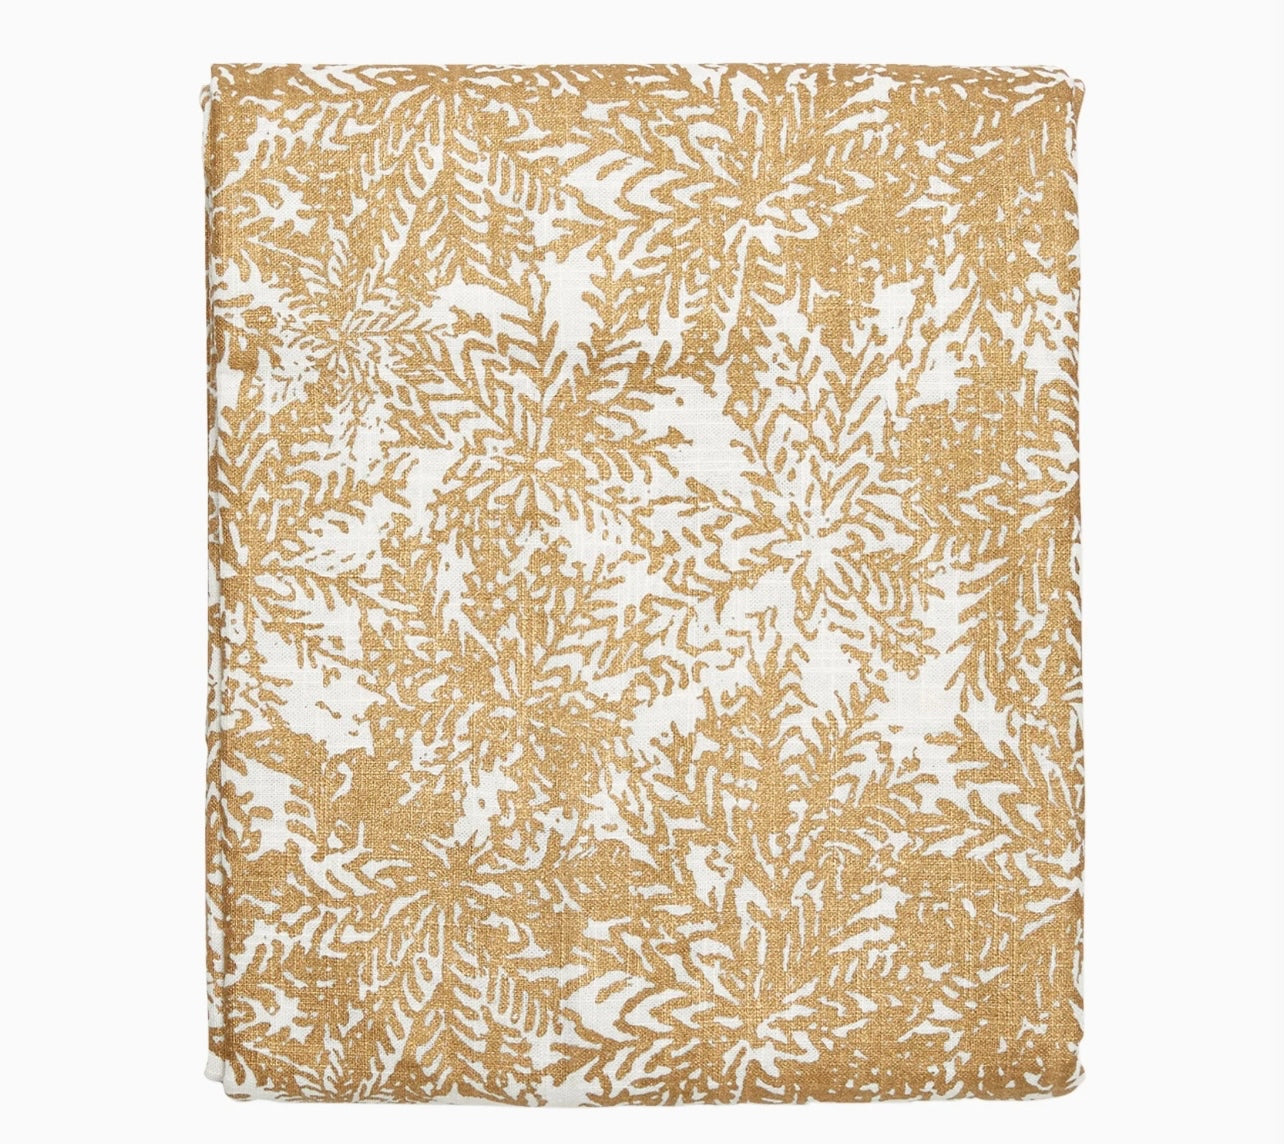 Atika Gold Tablecloth by John Robshaw - 2 sizes available